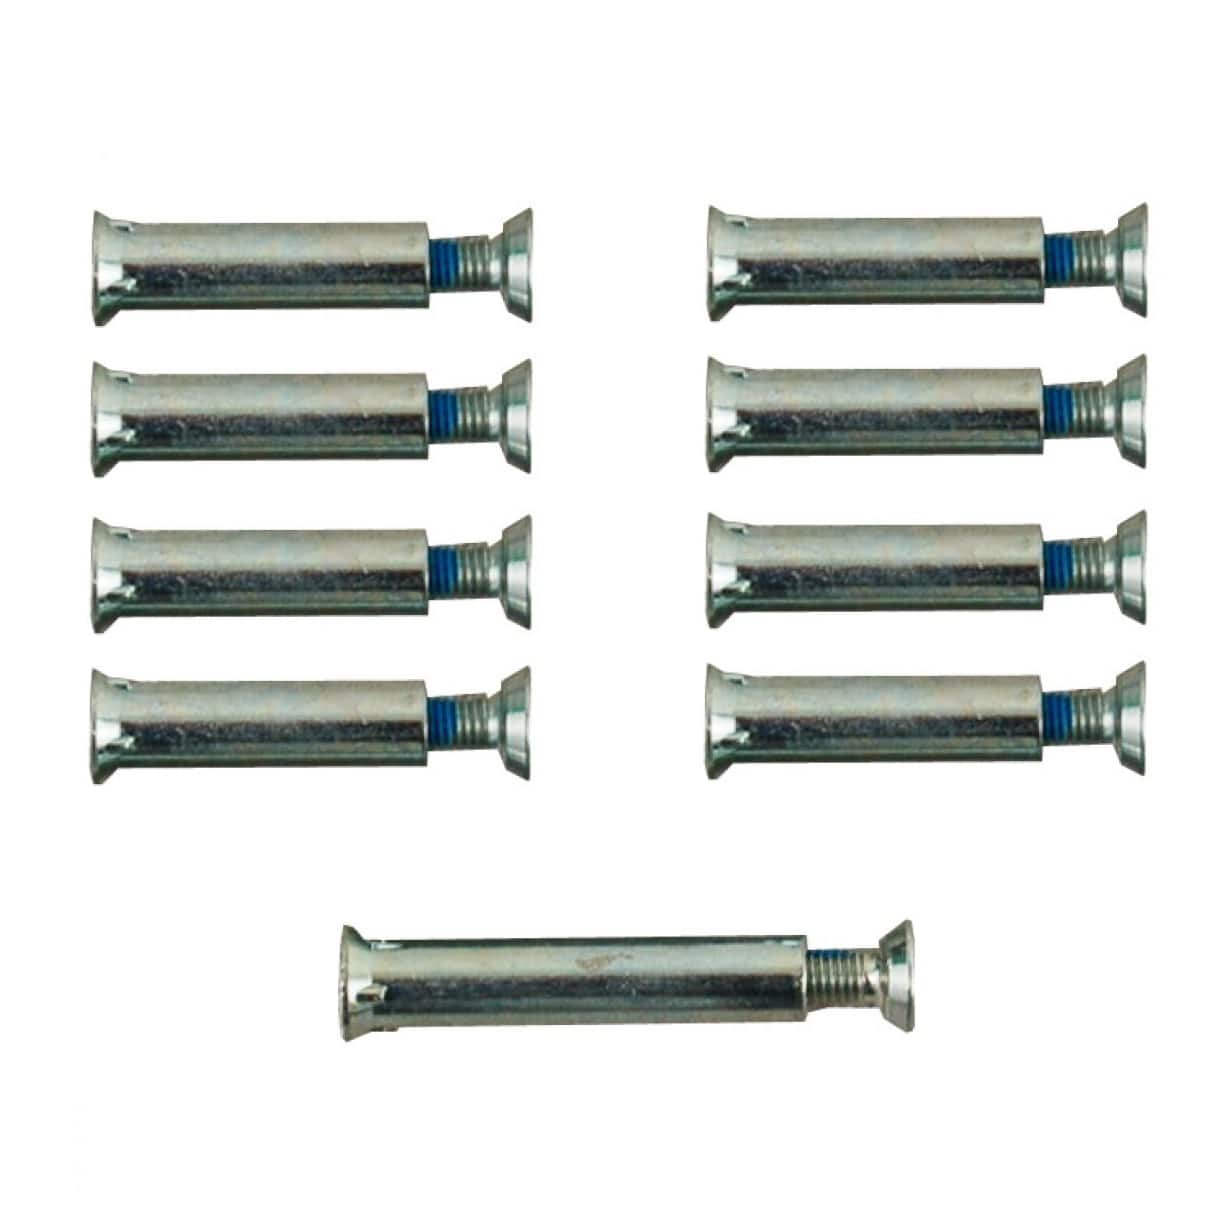 rollerblade-aluminum-frame-hardware-kit